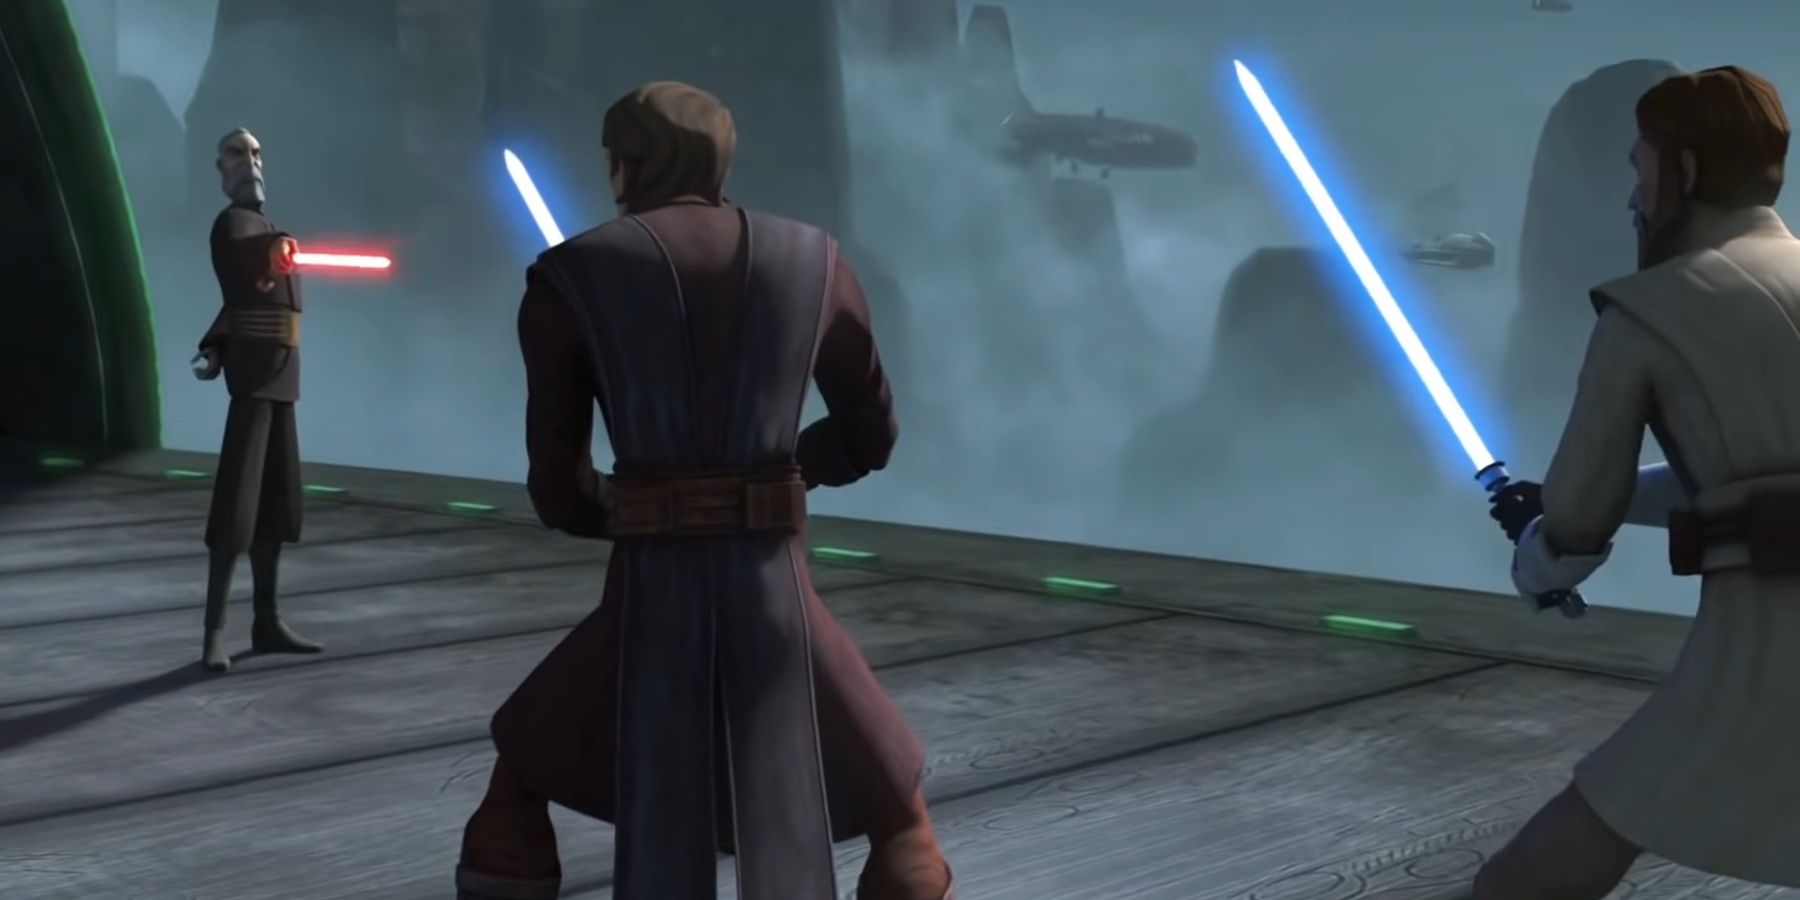 Obi-Wan Kenobi and Anakin Skywalker confronting Count Dooku in Star Wars The Clone Wars